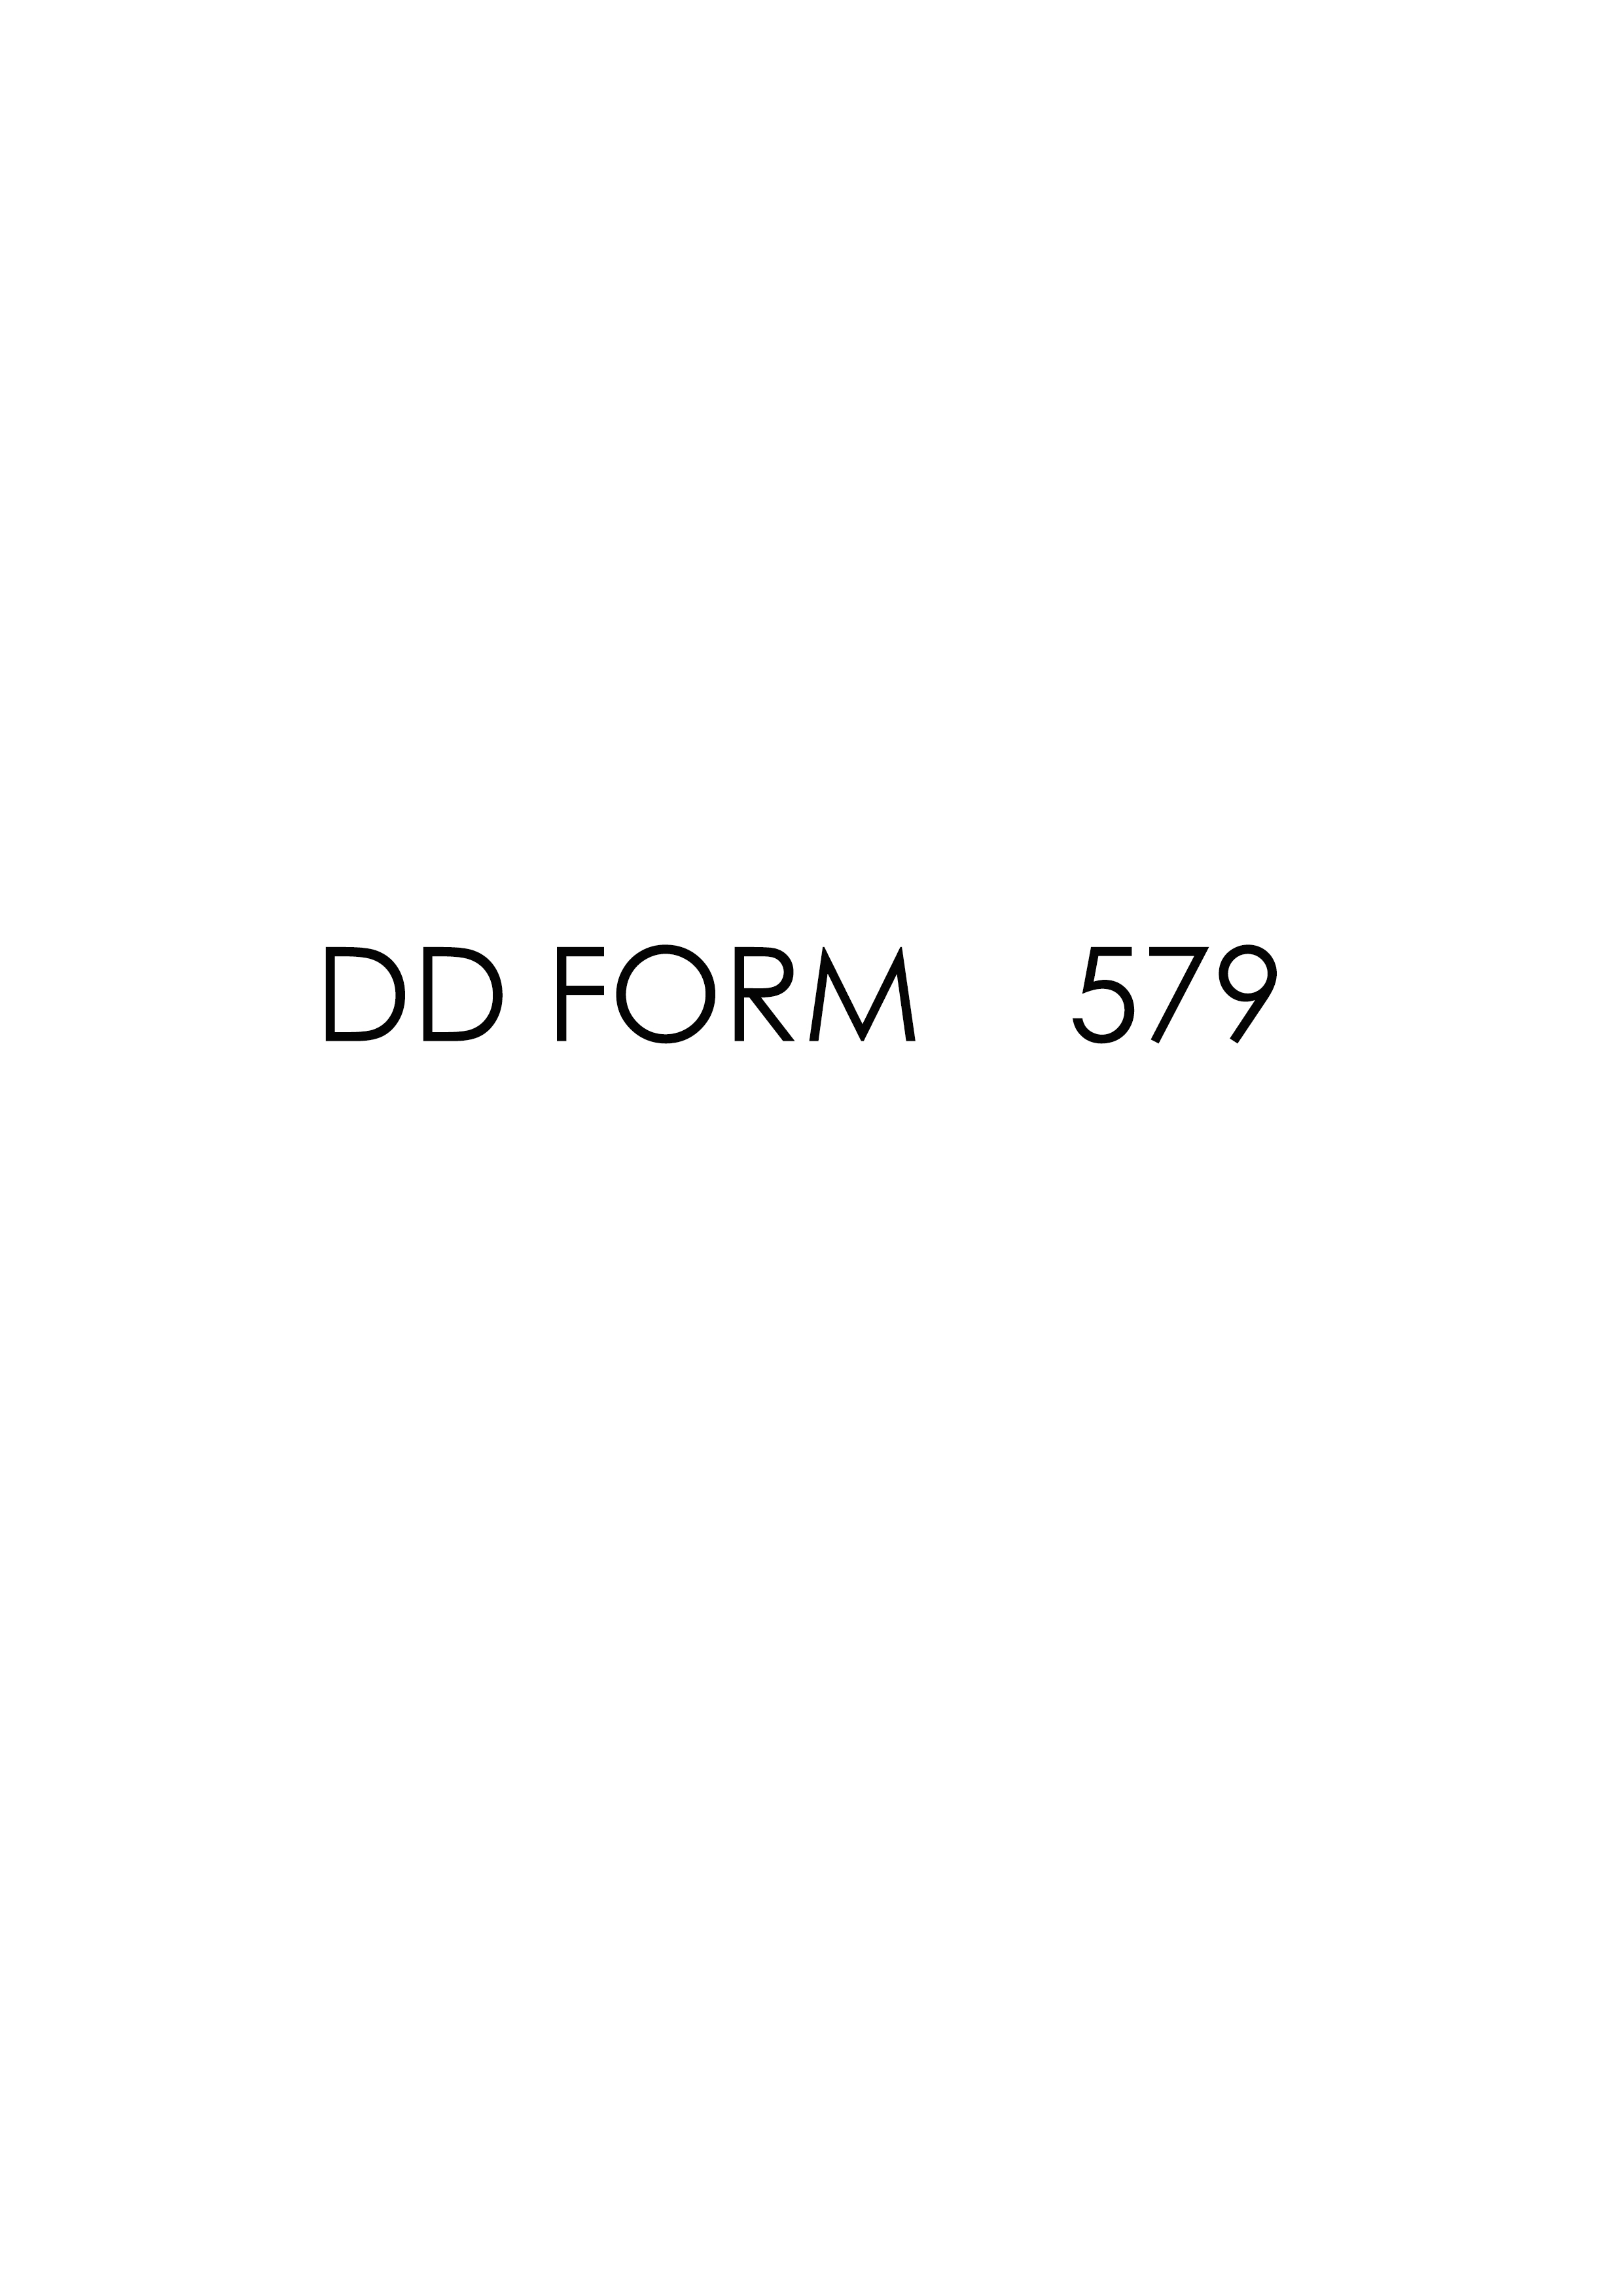 Download dd form 579